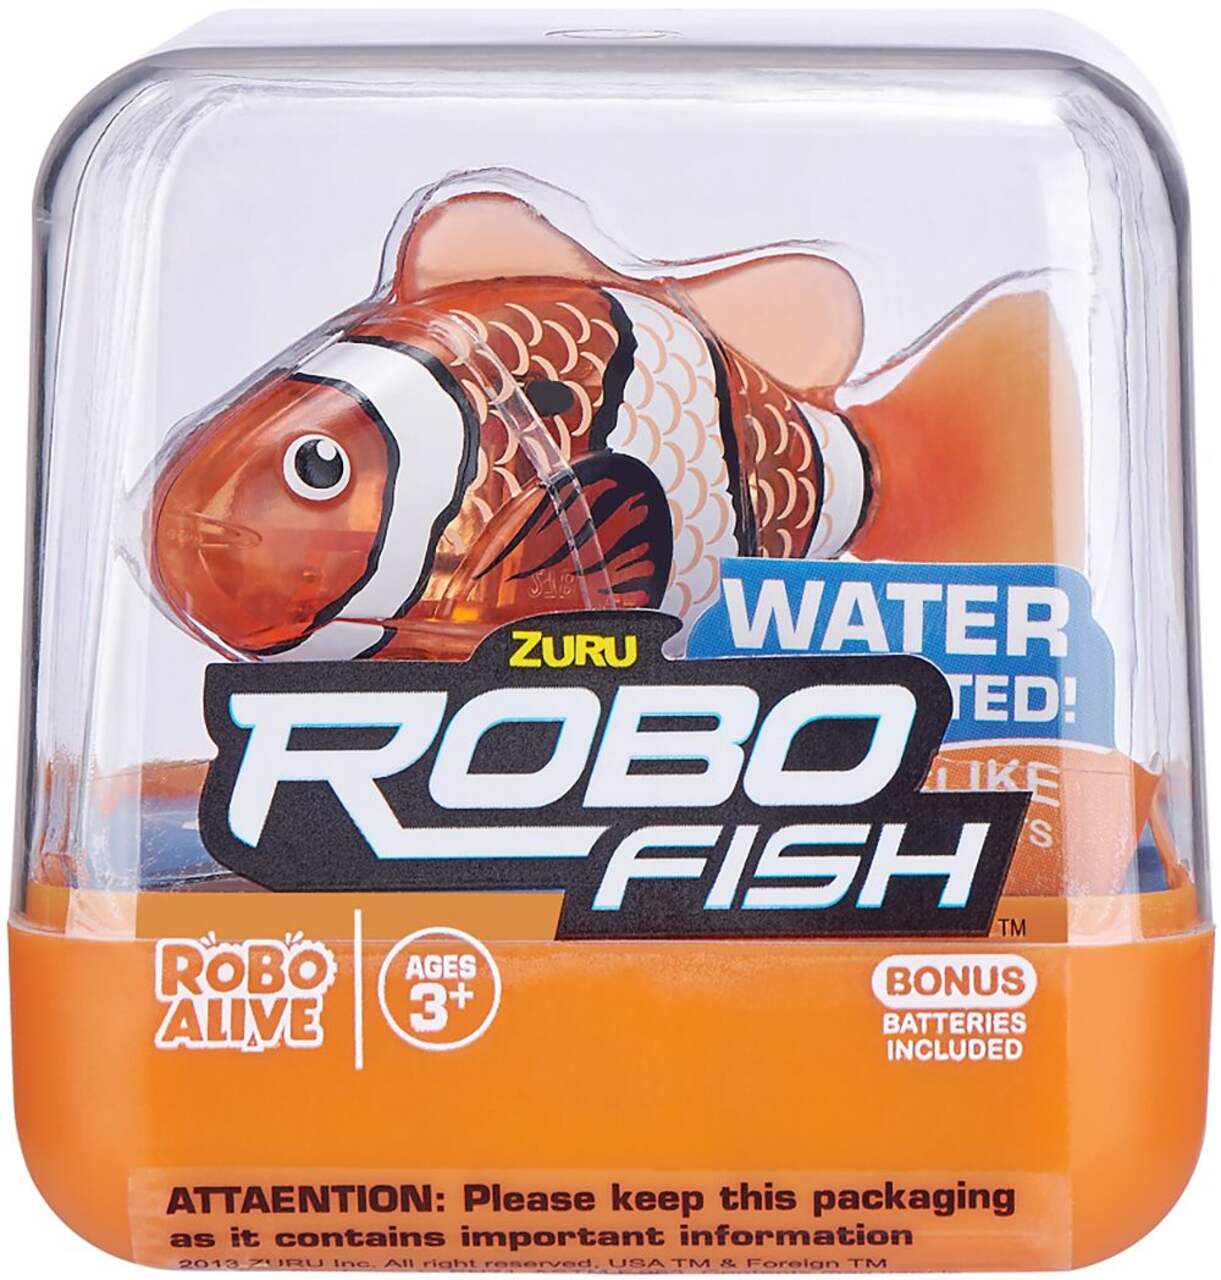 ZURU Robo Alive Robotic Fish Toy For Kids, Assorted, Ages 3+